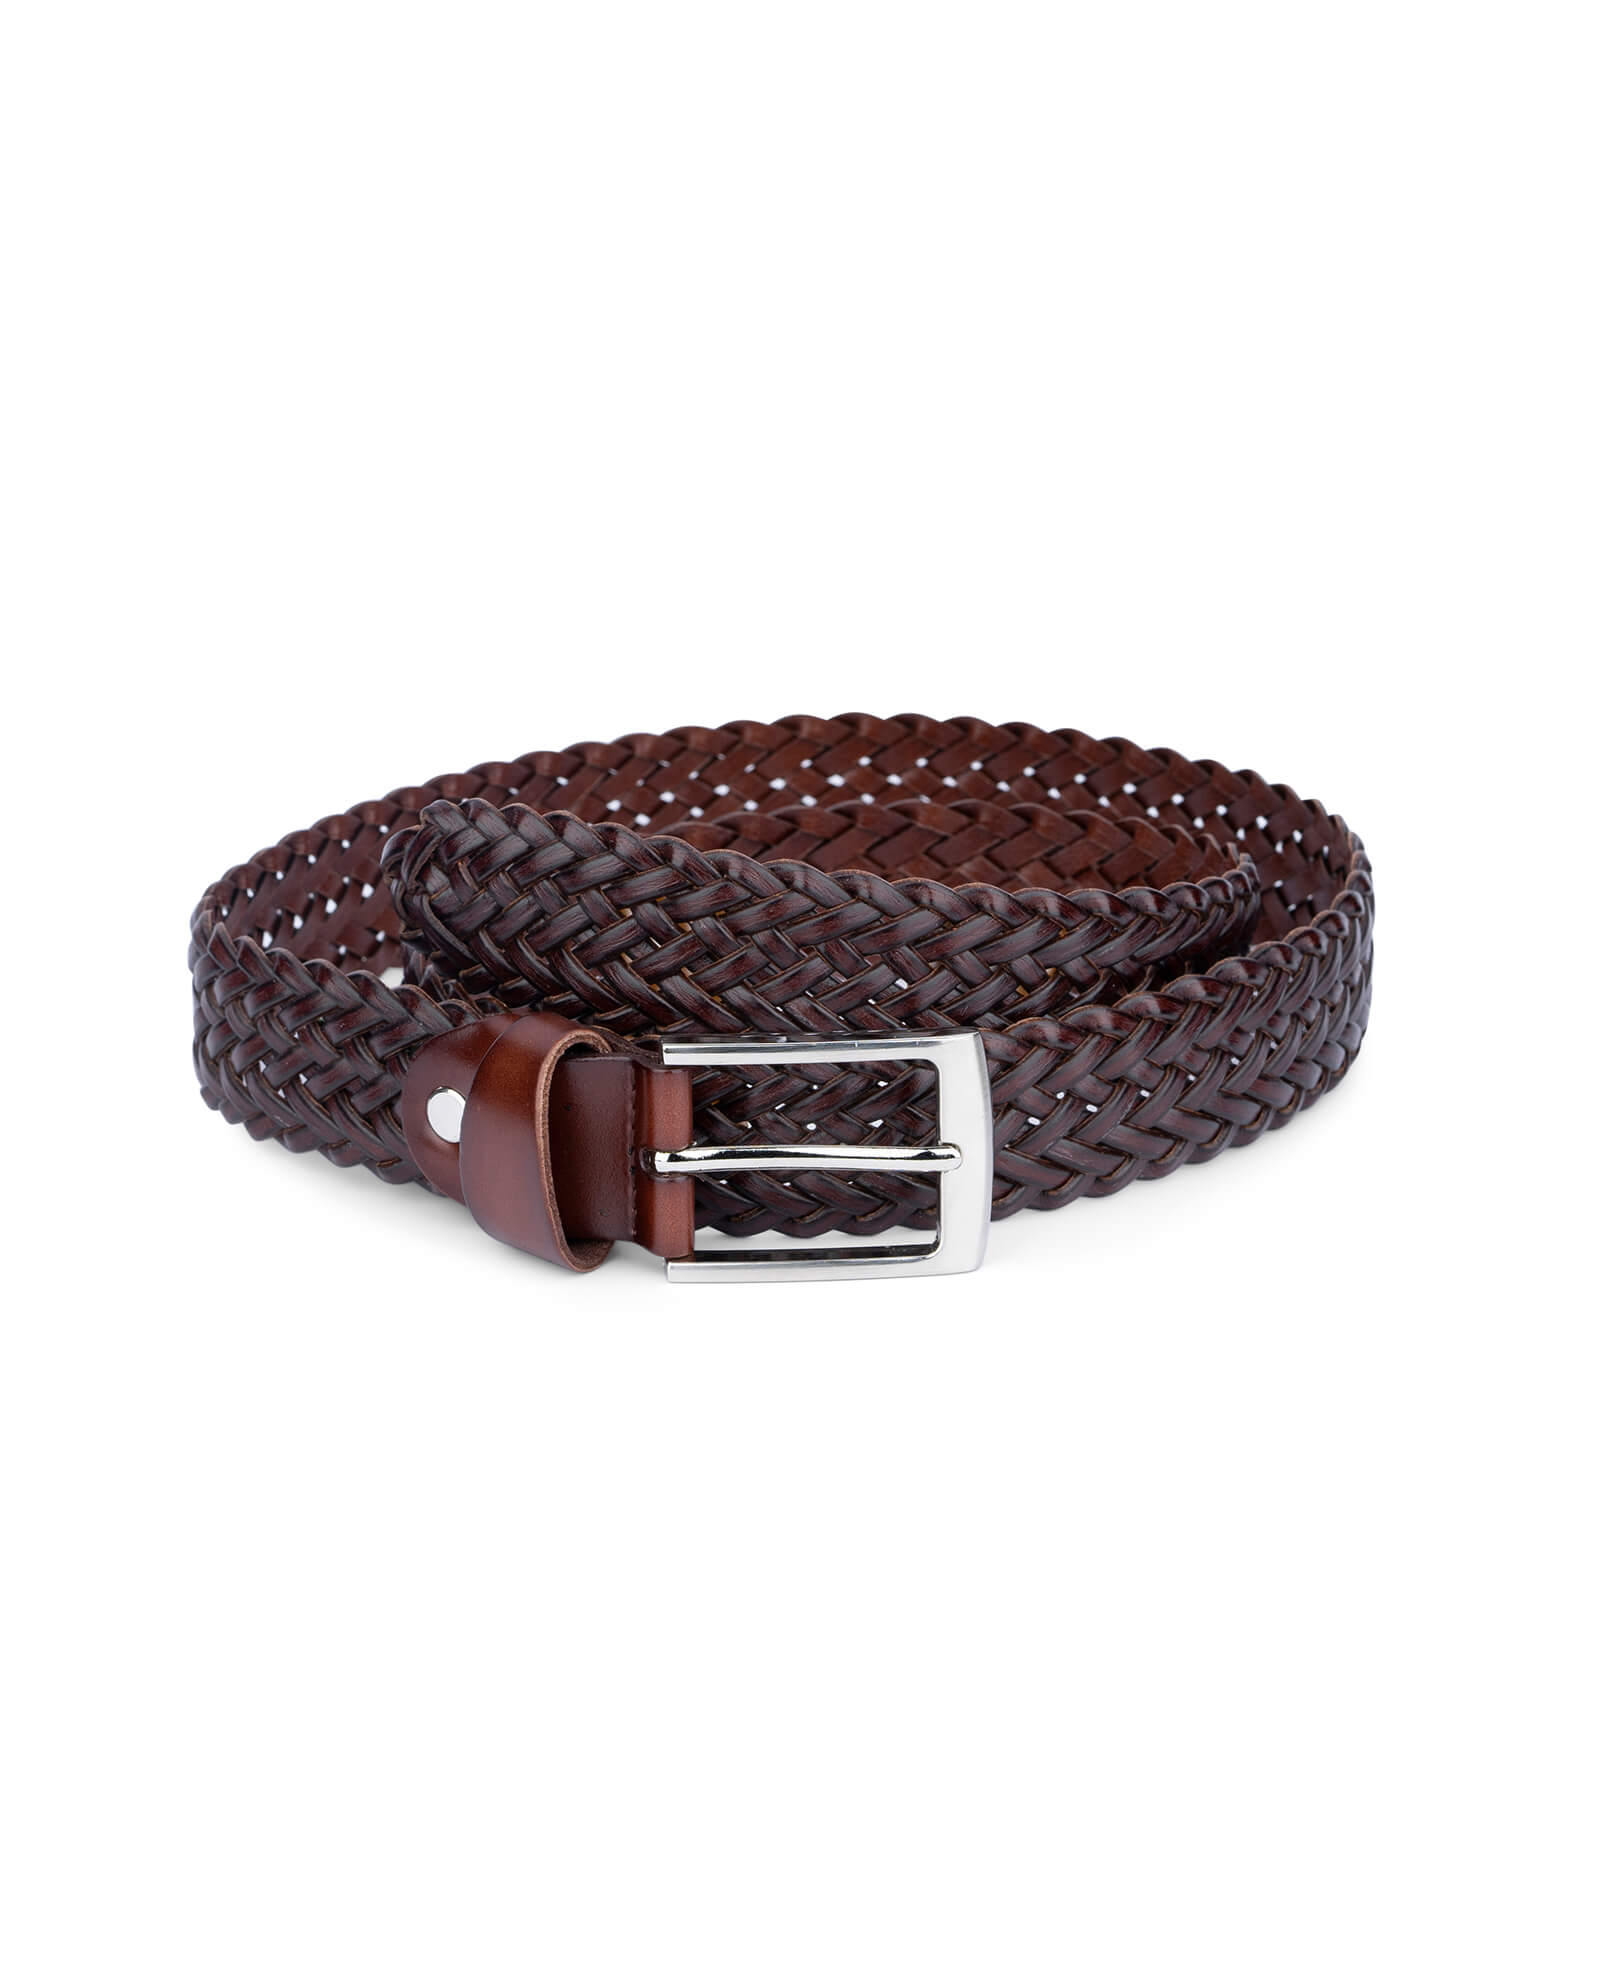 Buy Cognac Men's Woven Belt | LeatherBeltsOnline.com